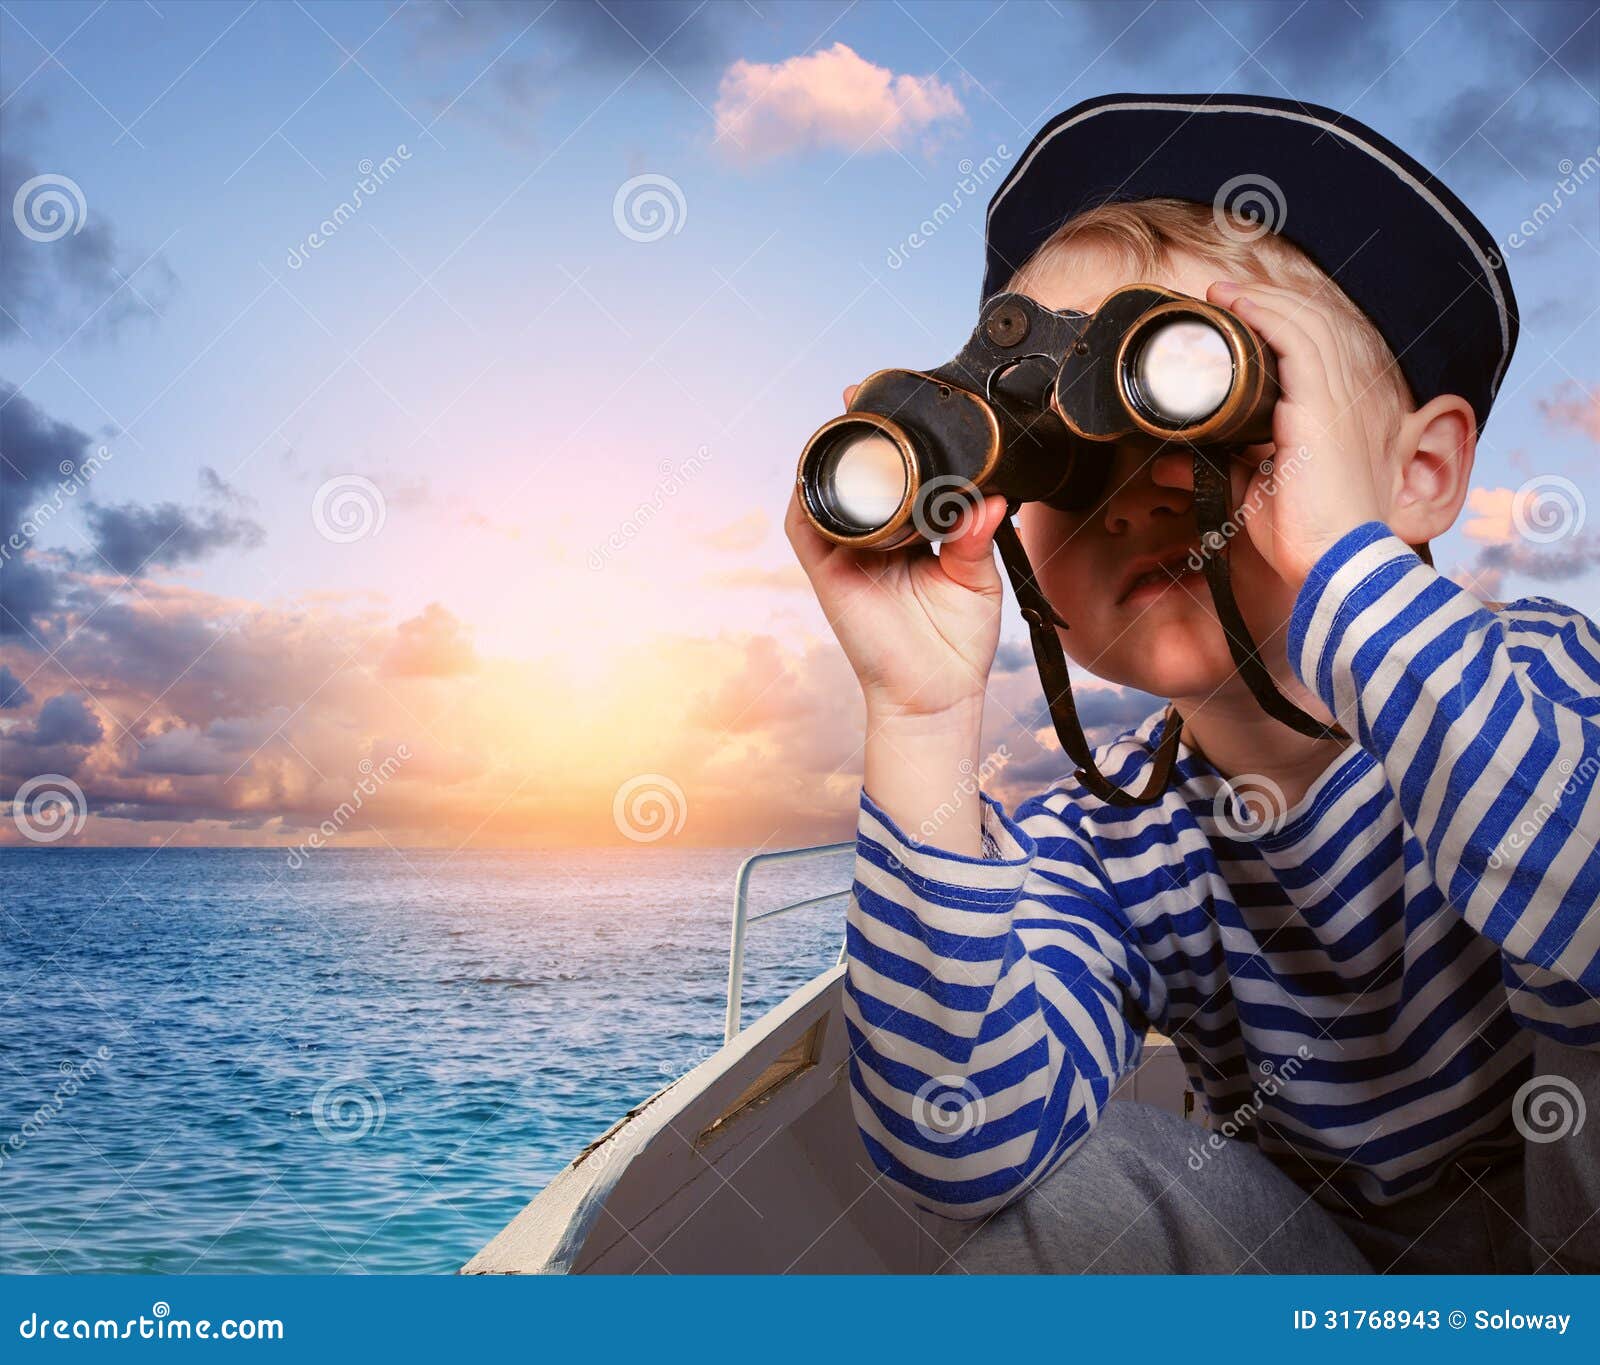 little ship boy with binocular